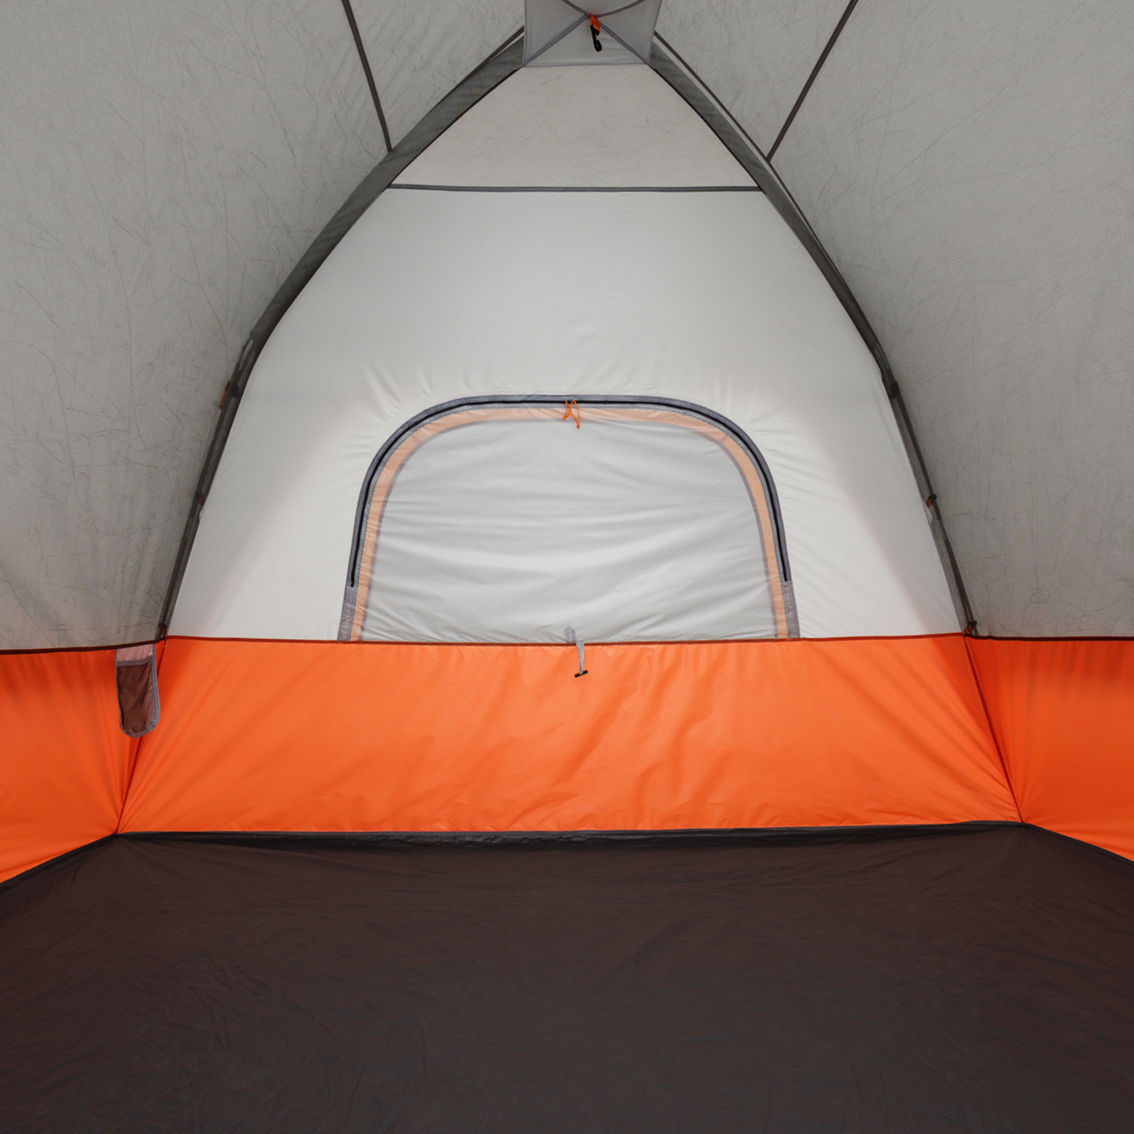 Core Equipment 6 Person Dome Tent with Vestibule - Image 4 of 6